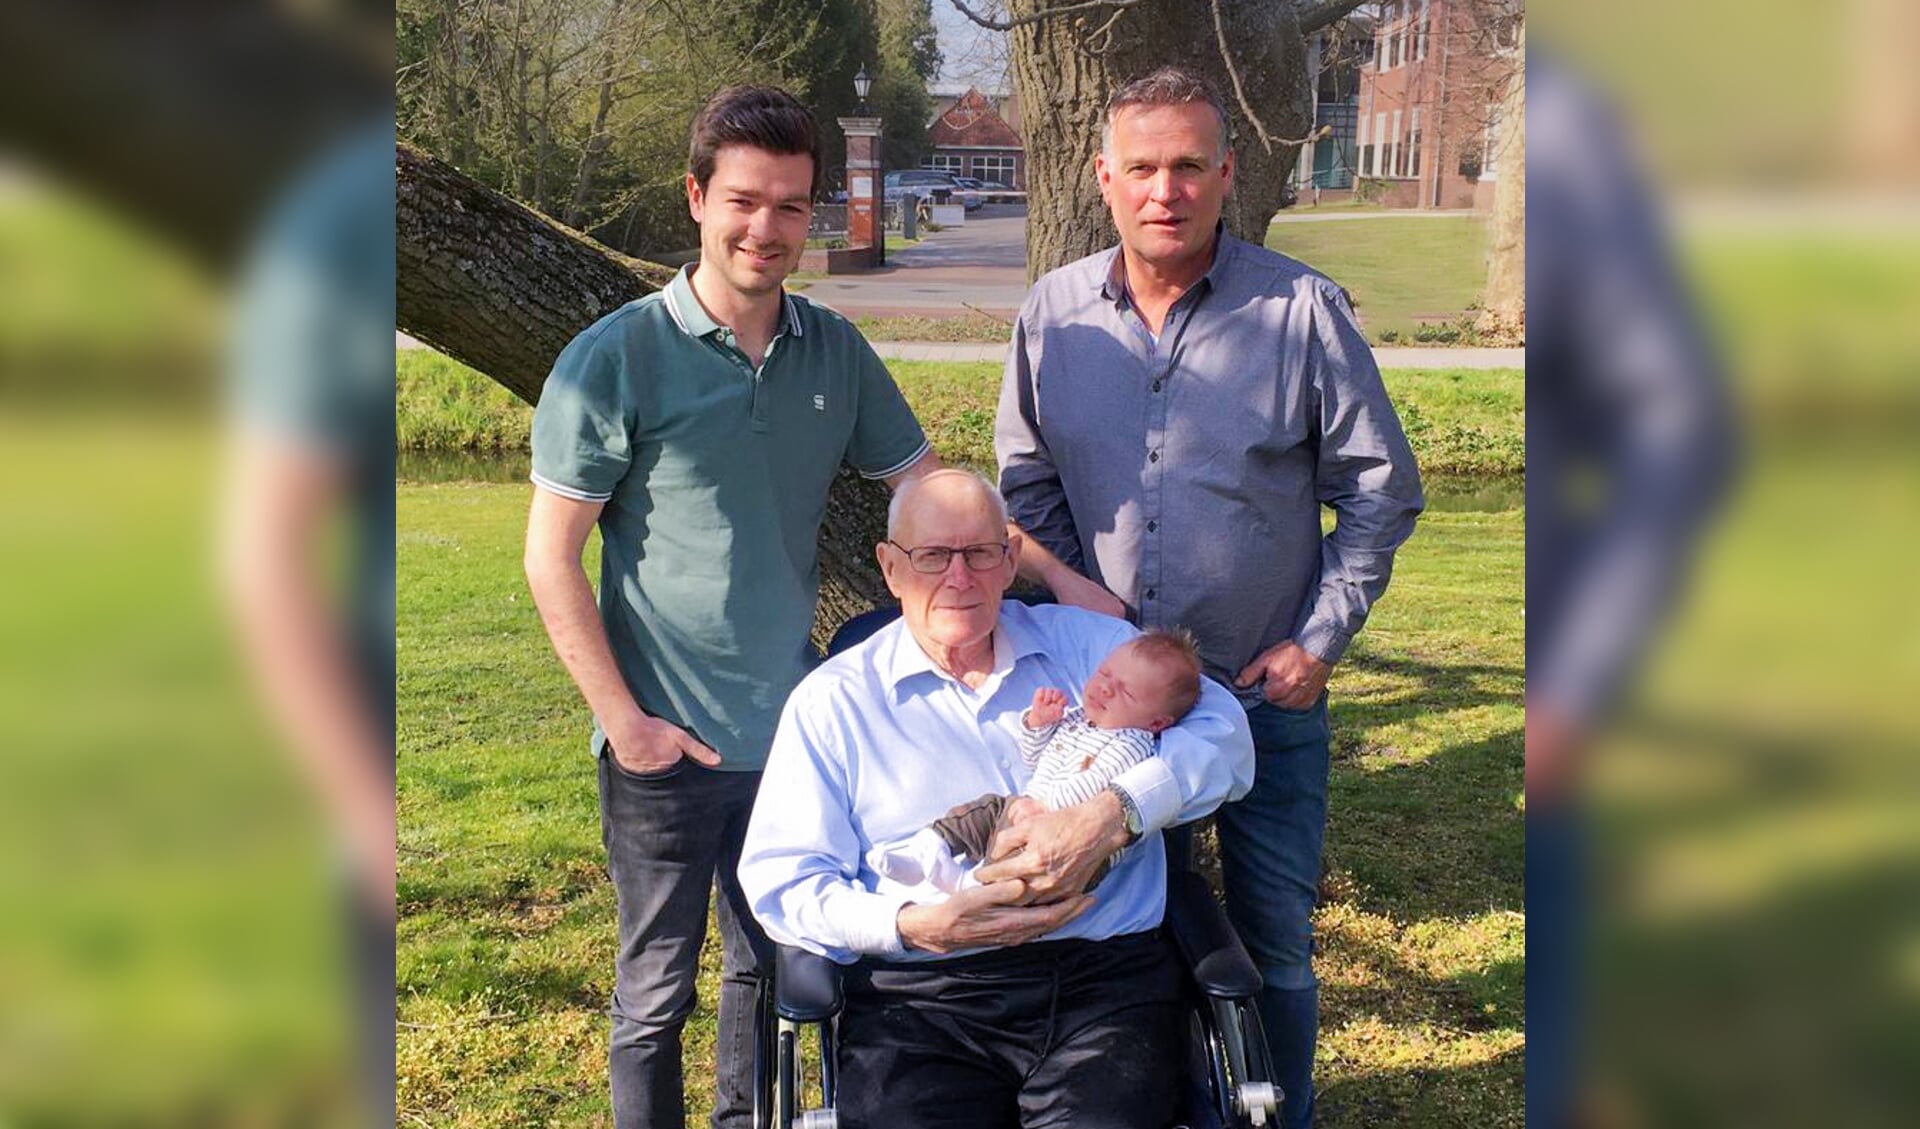 Overgrootvader Jan van Gennip (85), grootvader Theo van Gennip (56), vader Arjan van Gennip (27) en de kleine Arvi van Gennip.